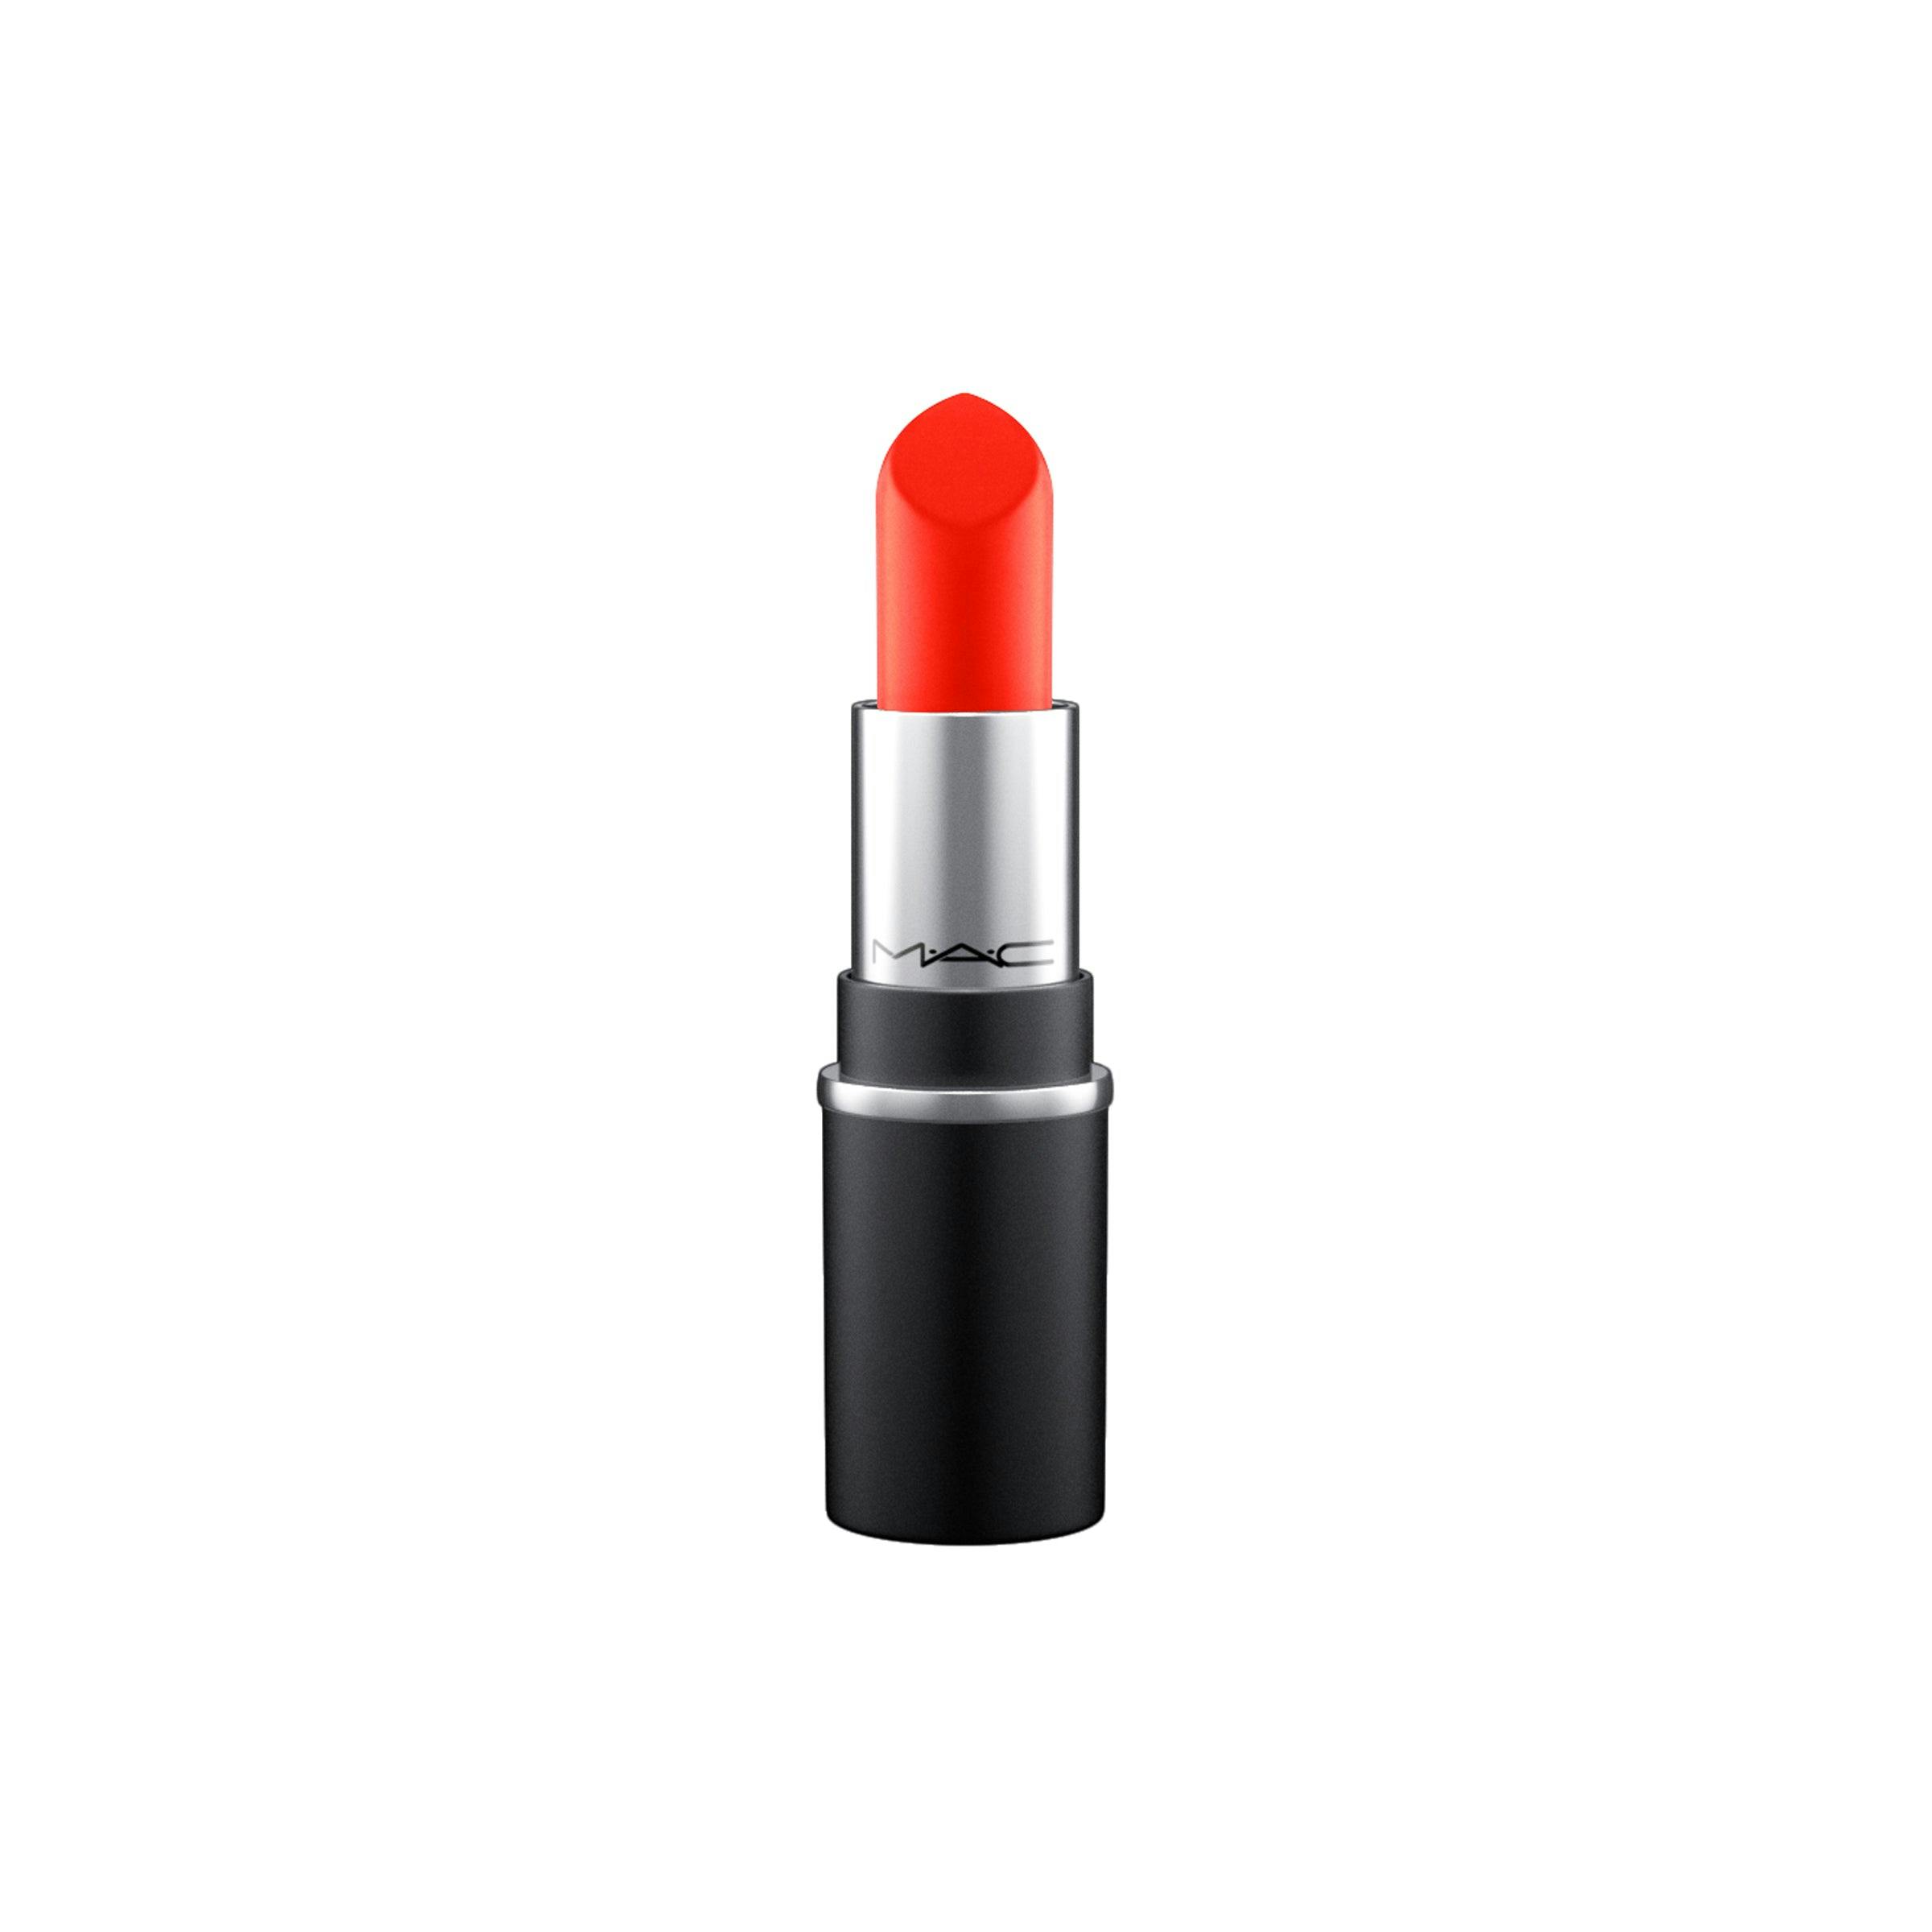 Lady Danger' matte lipstick